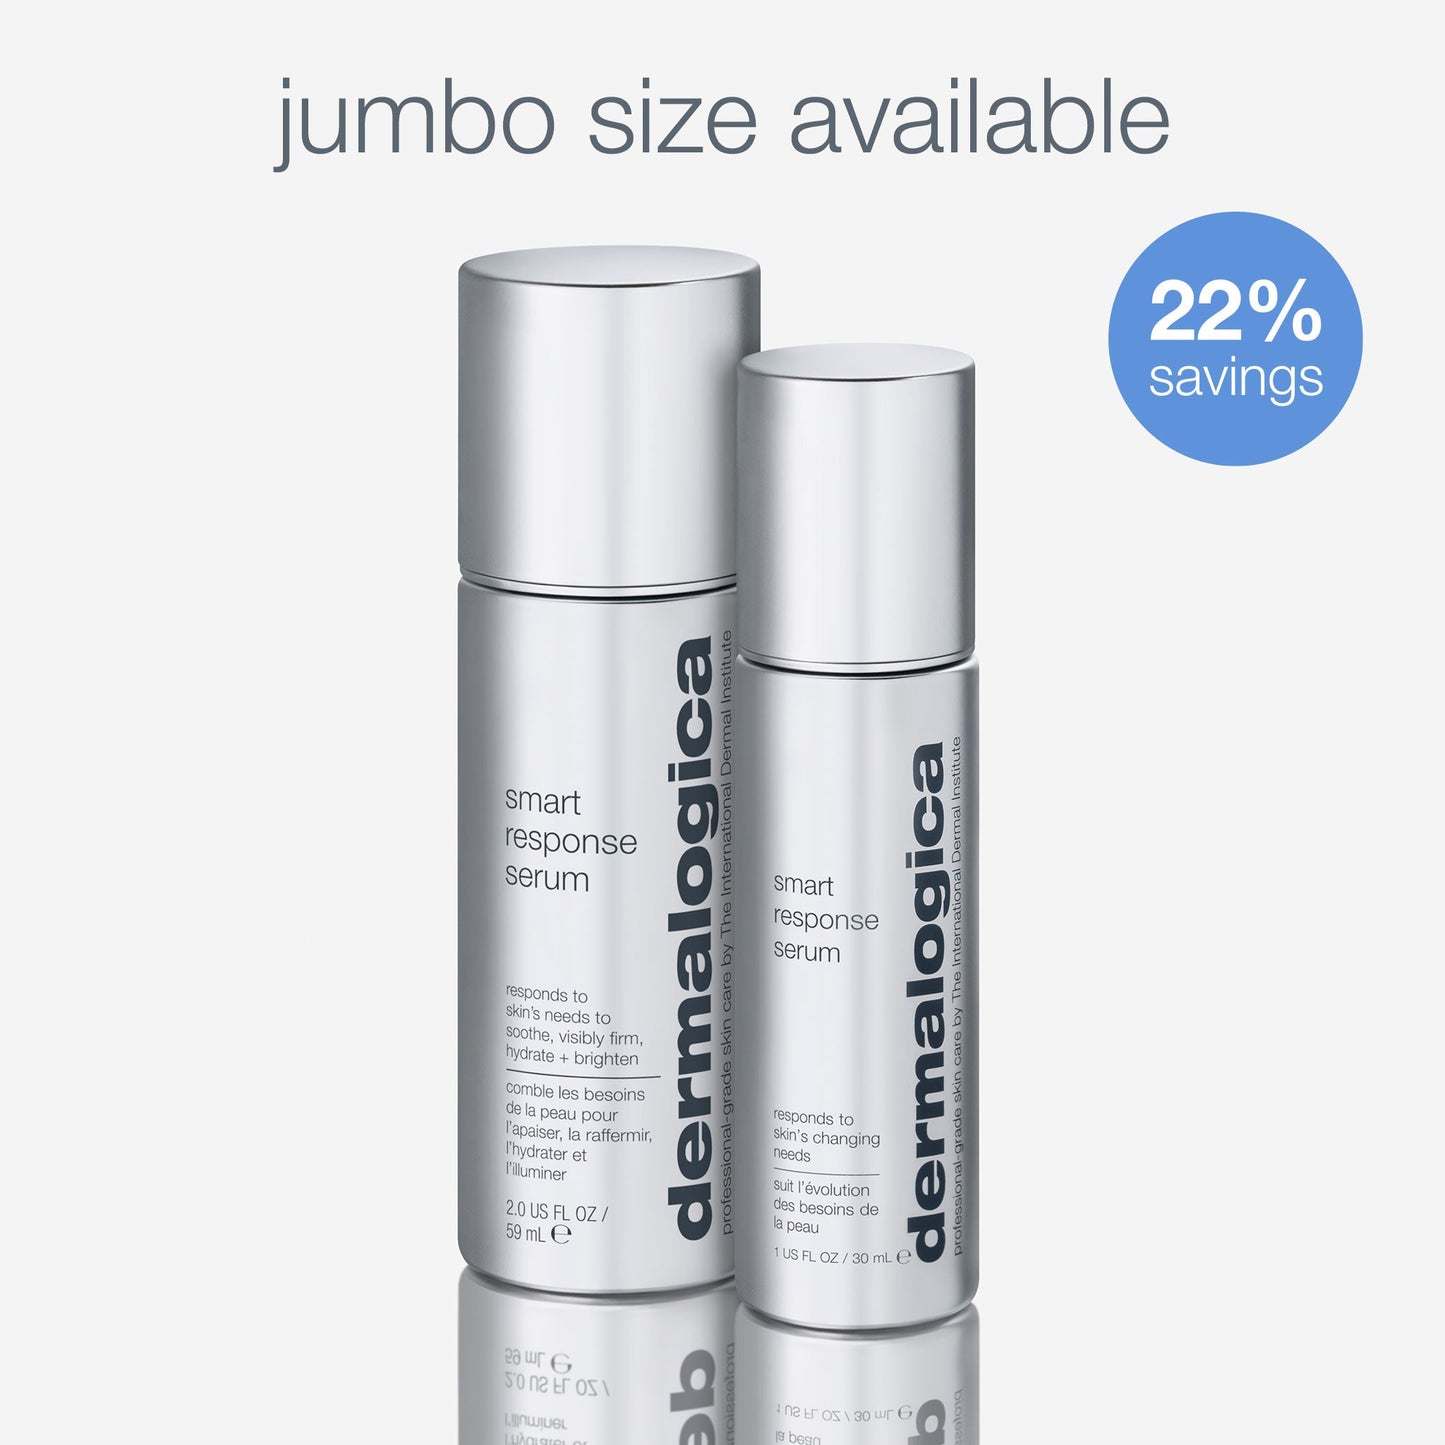 smart response serum jumbo size available